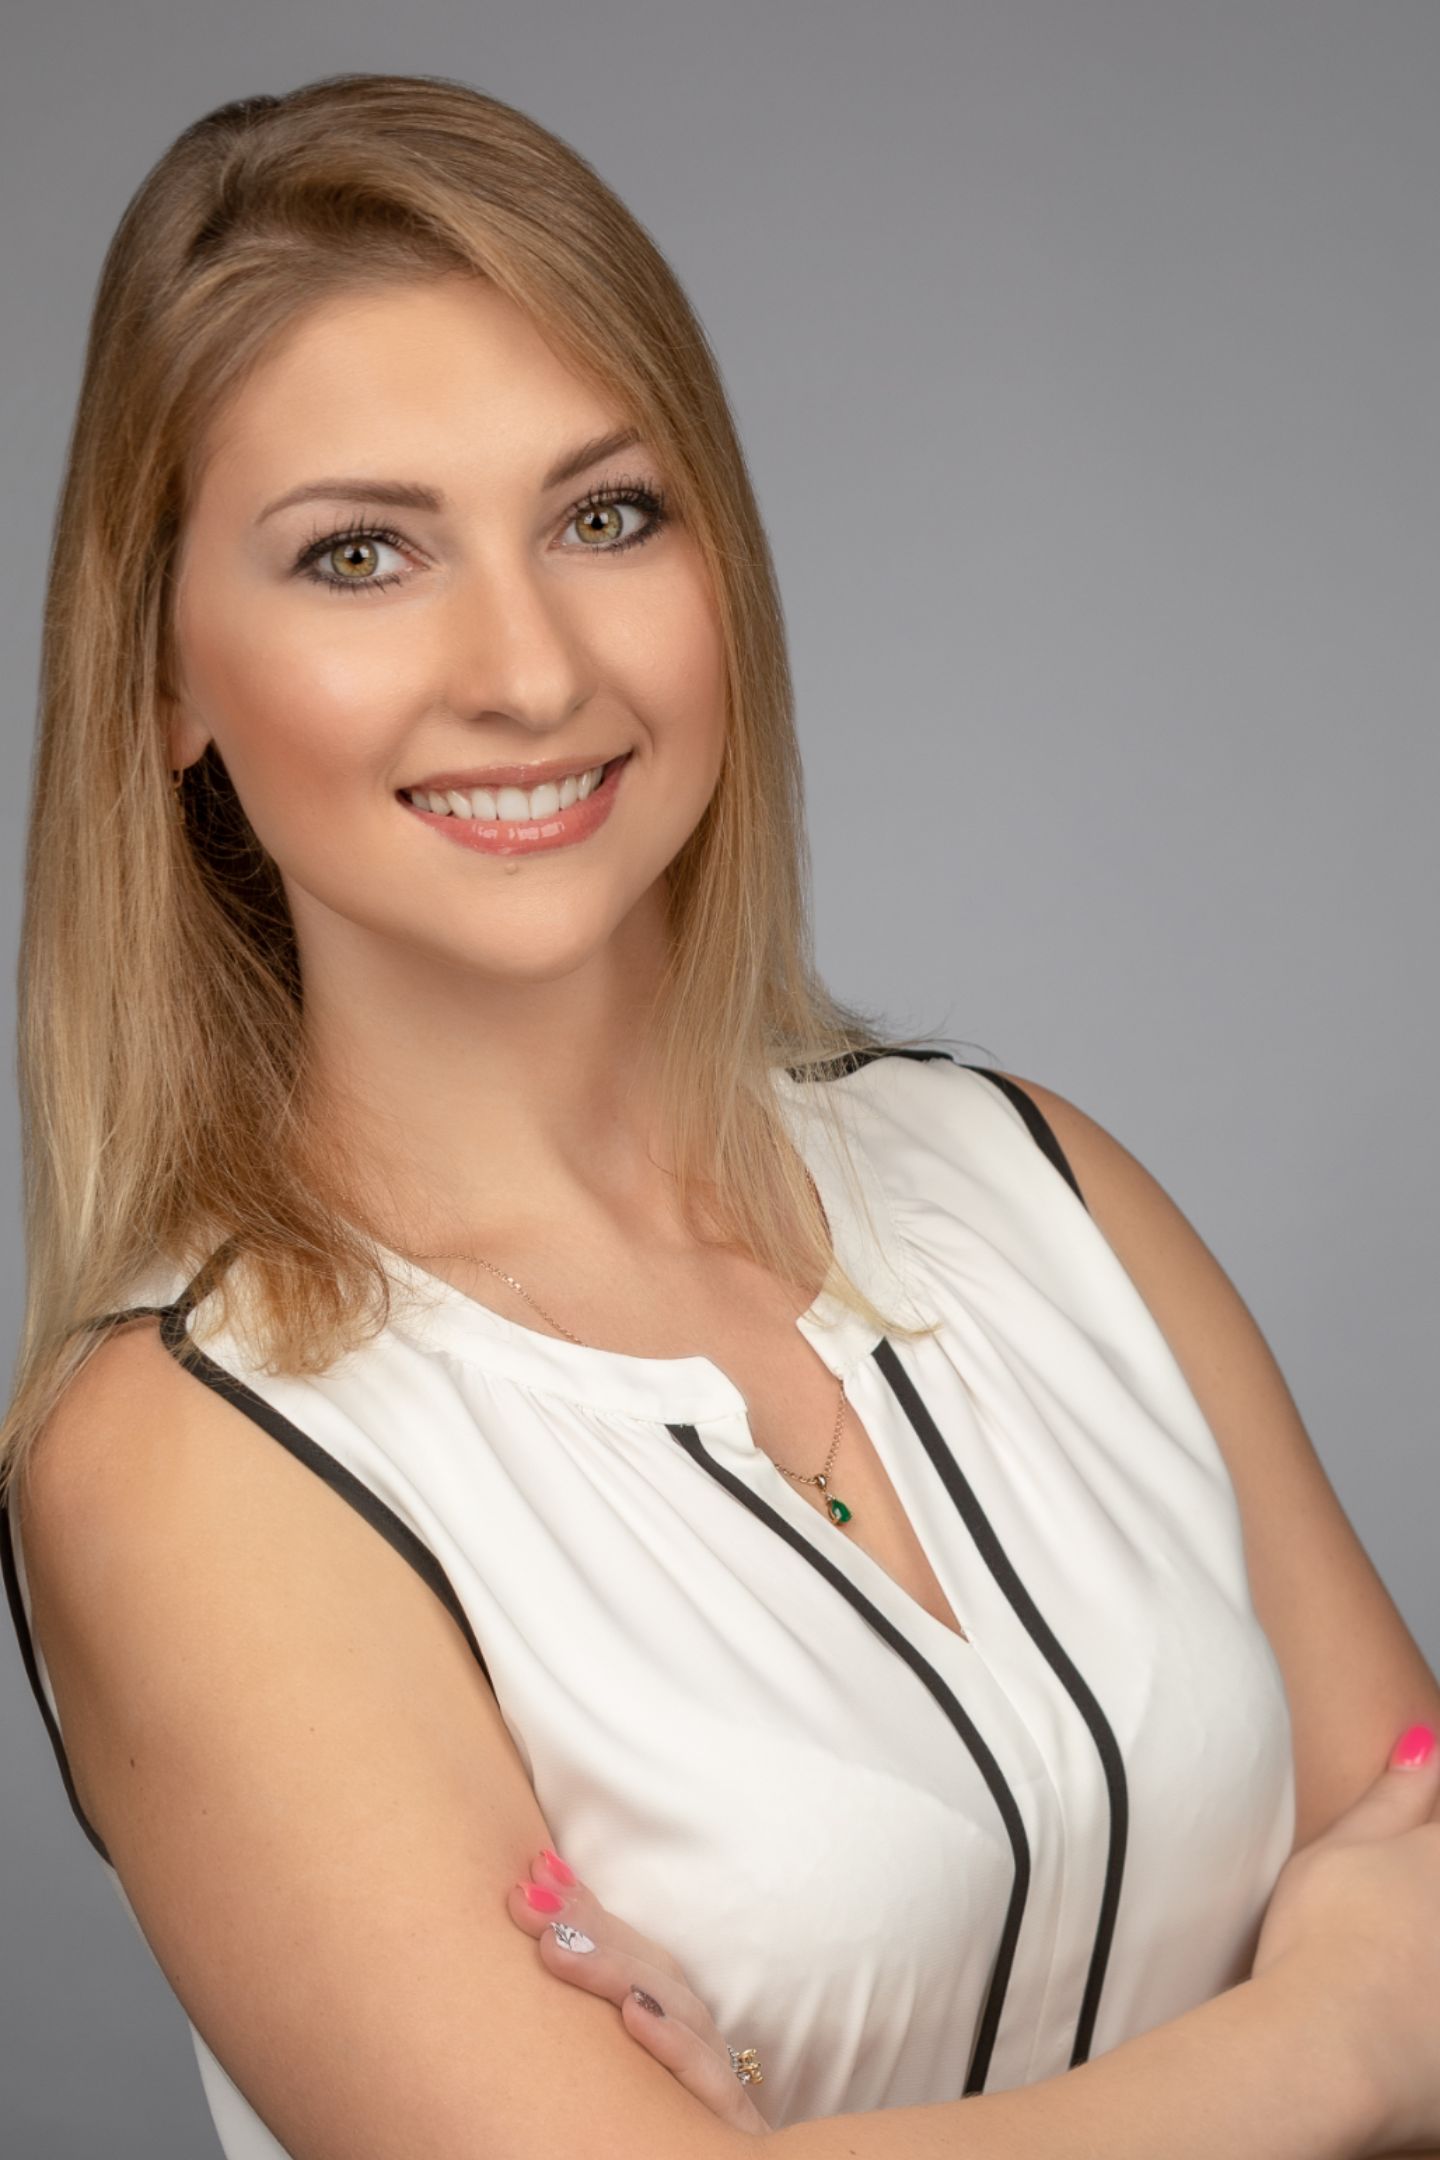 Natalia Sgibneva Real Estate Agent Miami Beach Fl Coldwell Banker